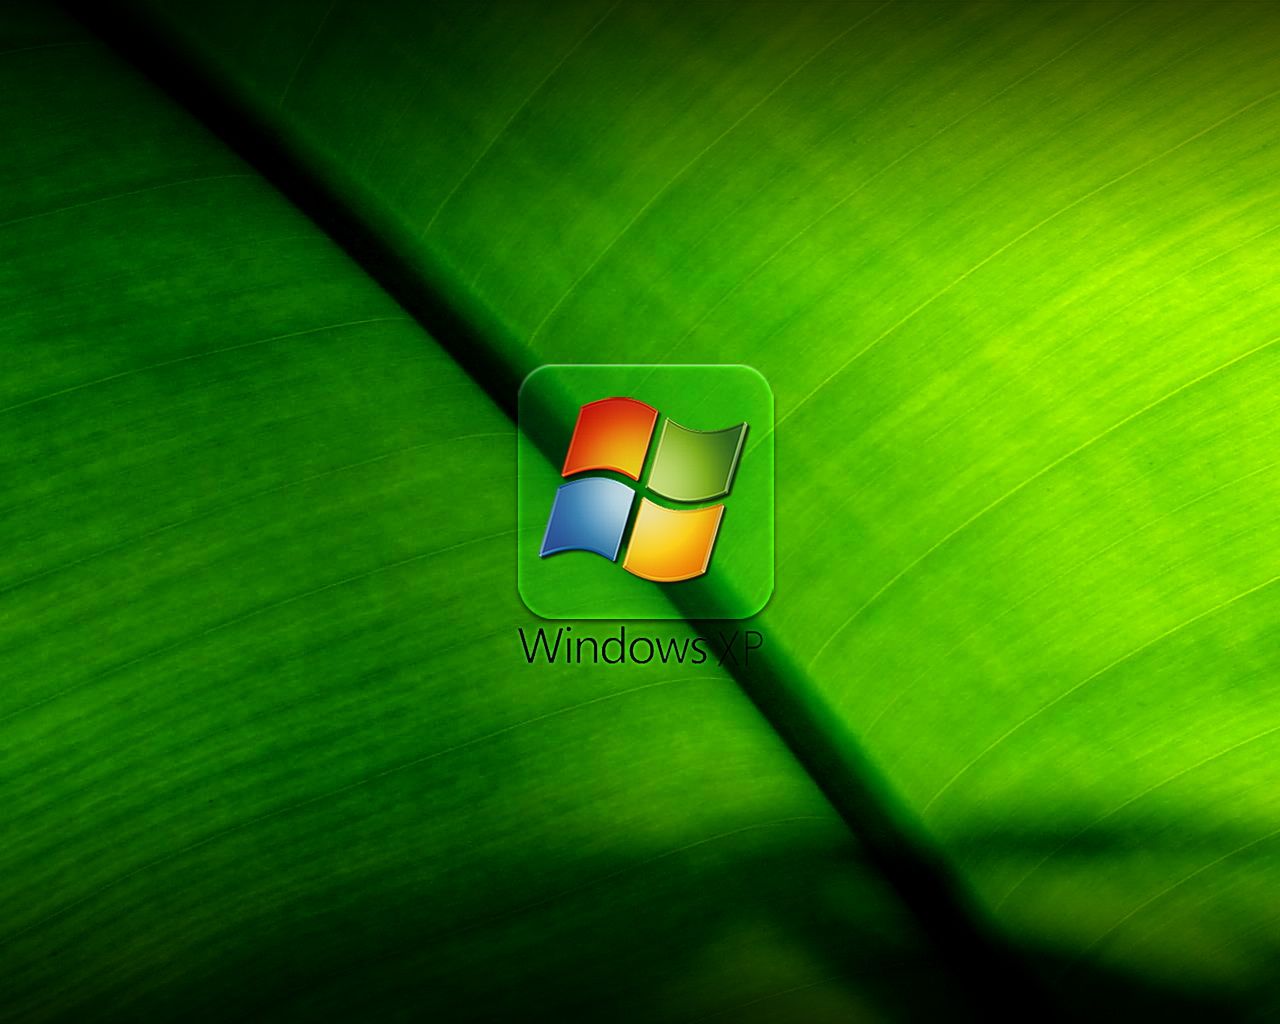 XP - Windows xp Wallpaper (26985988) - Fanpop